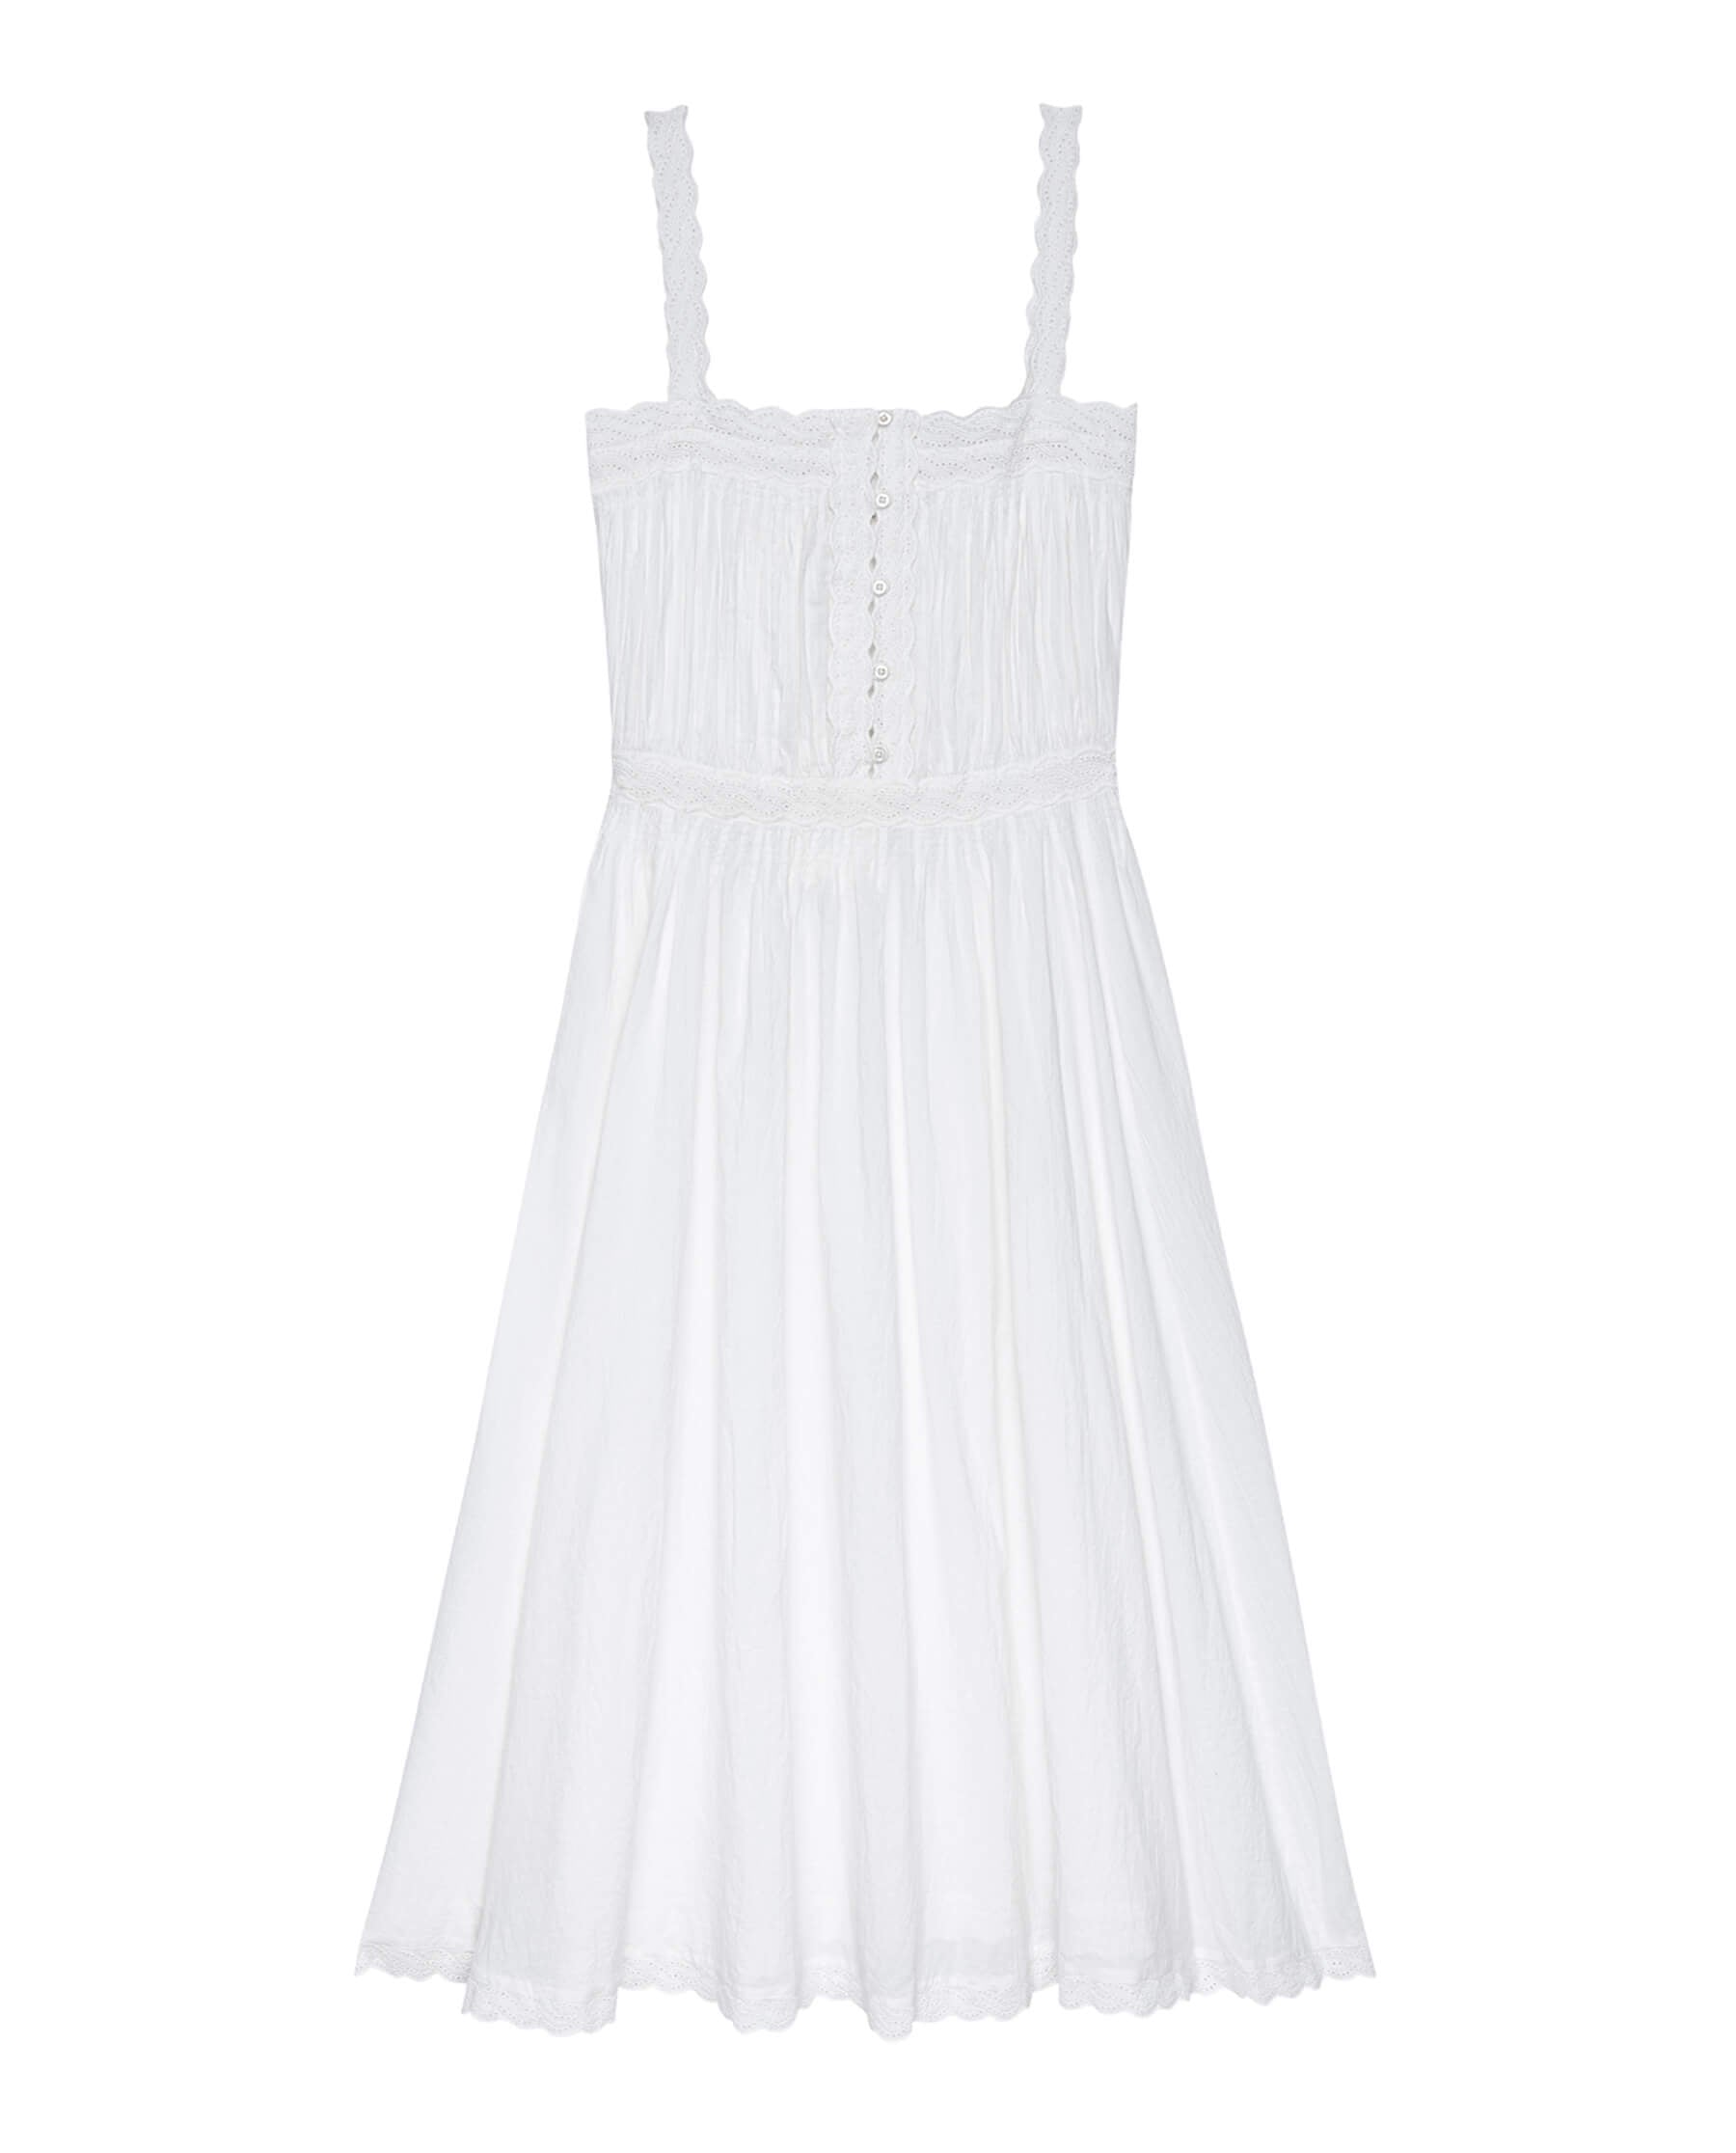 The Cachet Dress. -- White